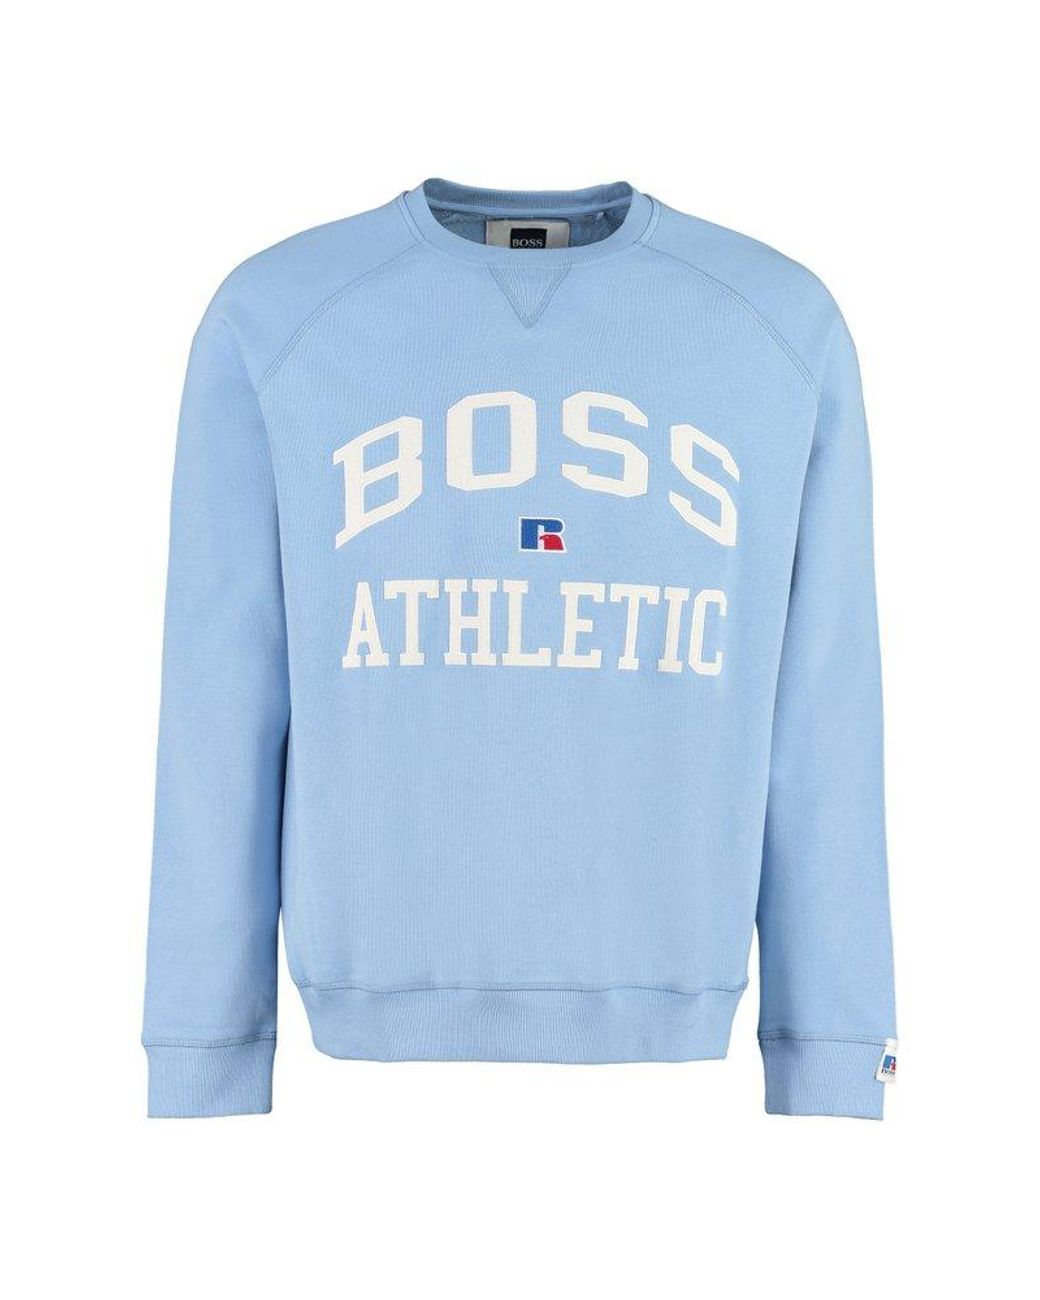 Boss Athletics Sweatshirt Size M